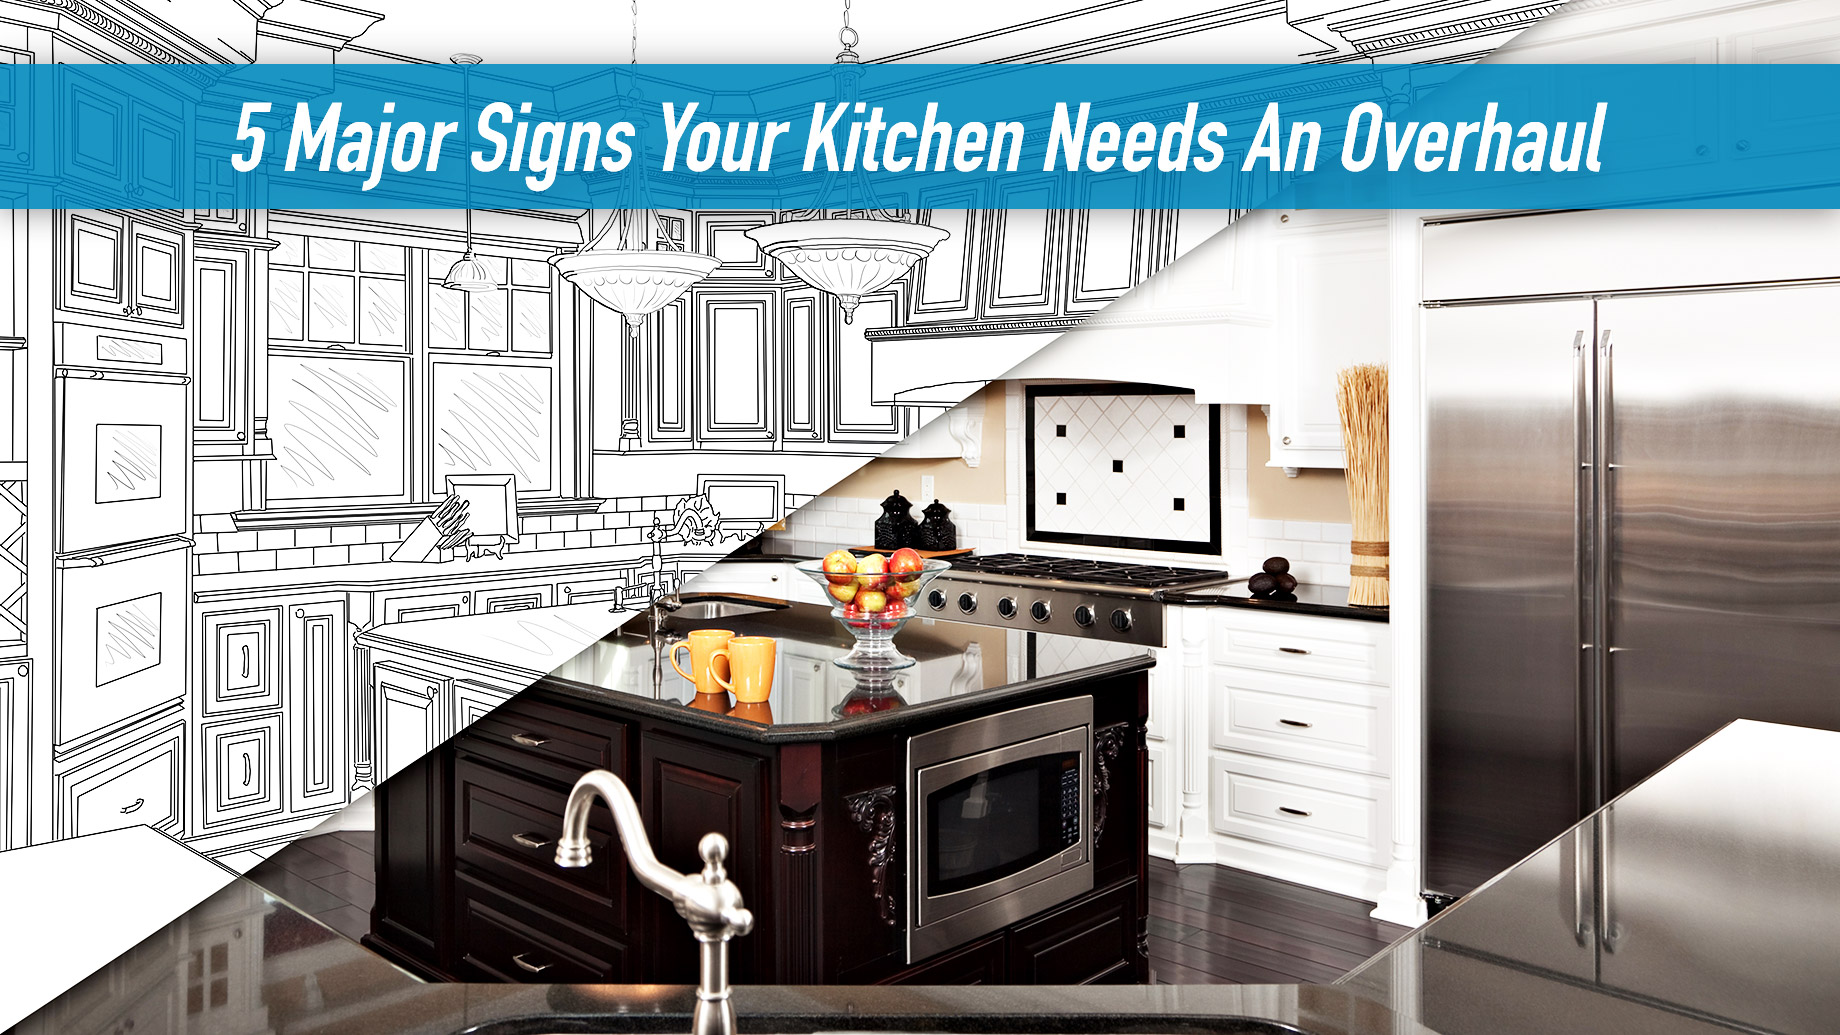 5 Major Signs Your Kitchen Needs An Overhaul